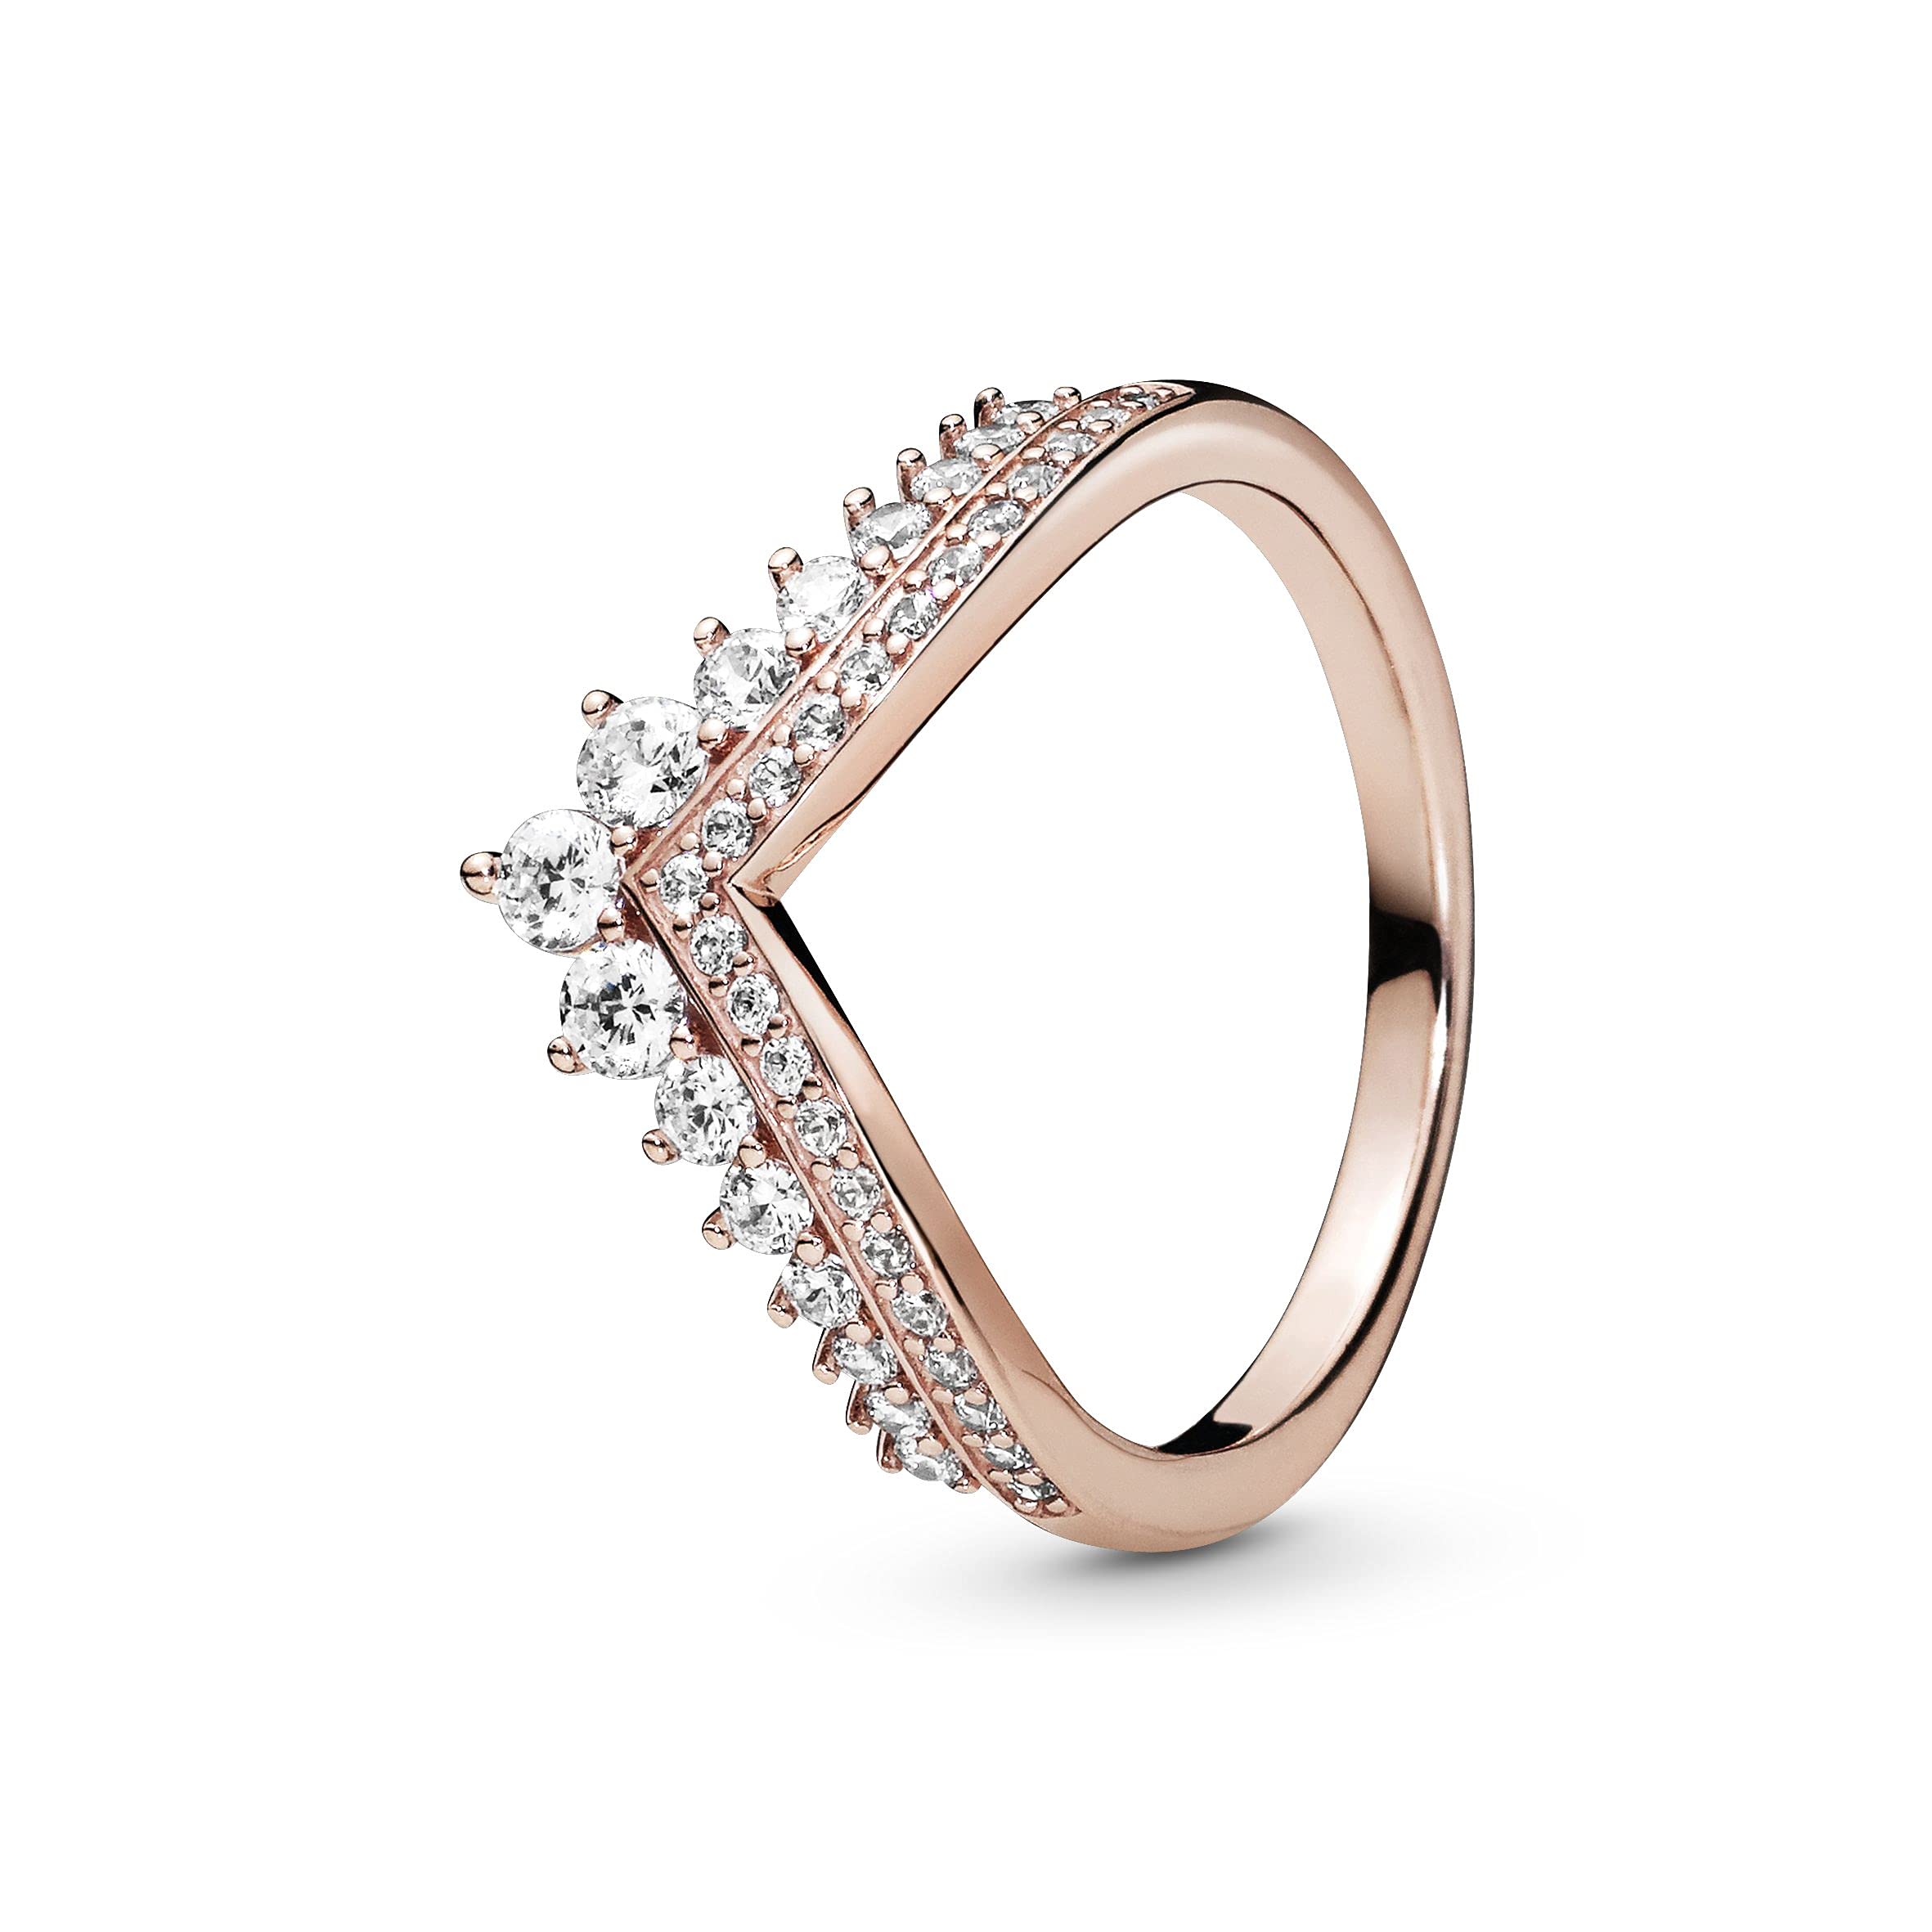 PANDORA Jewelry - Princess Sparkling Wishbone Cubic Zirconia Ring - Gift for Her Rose